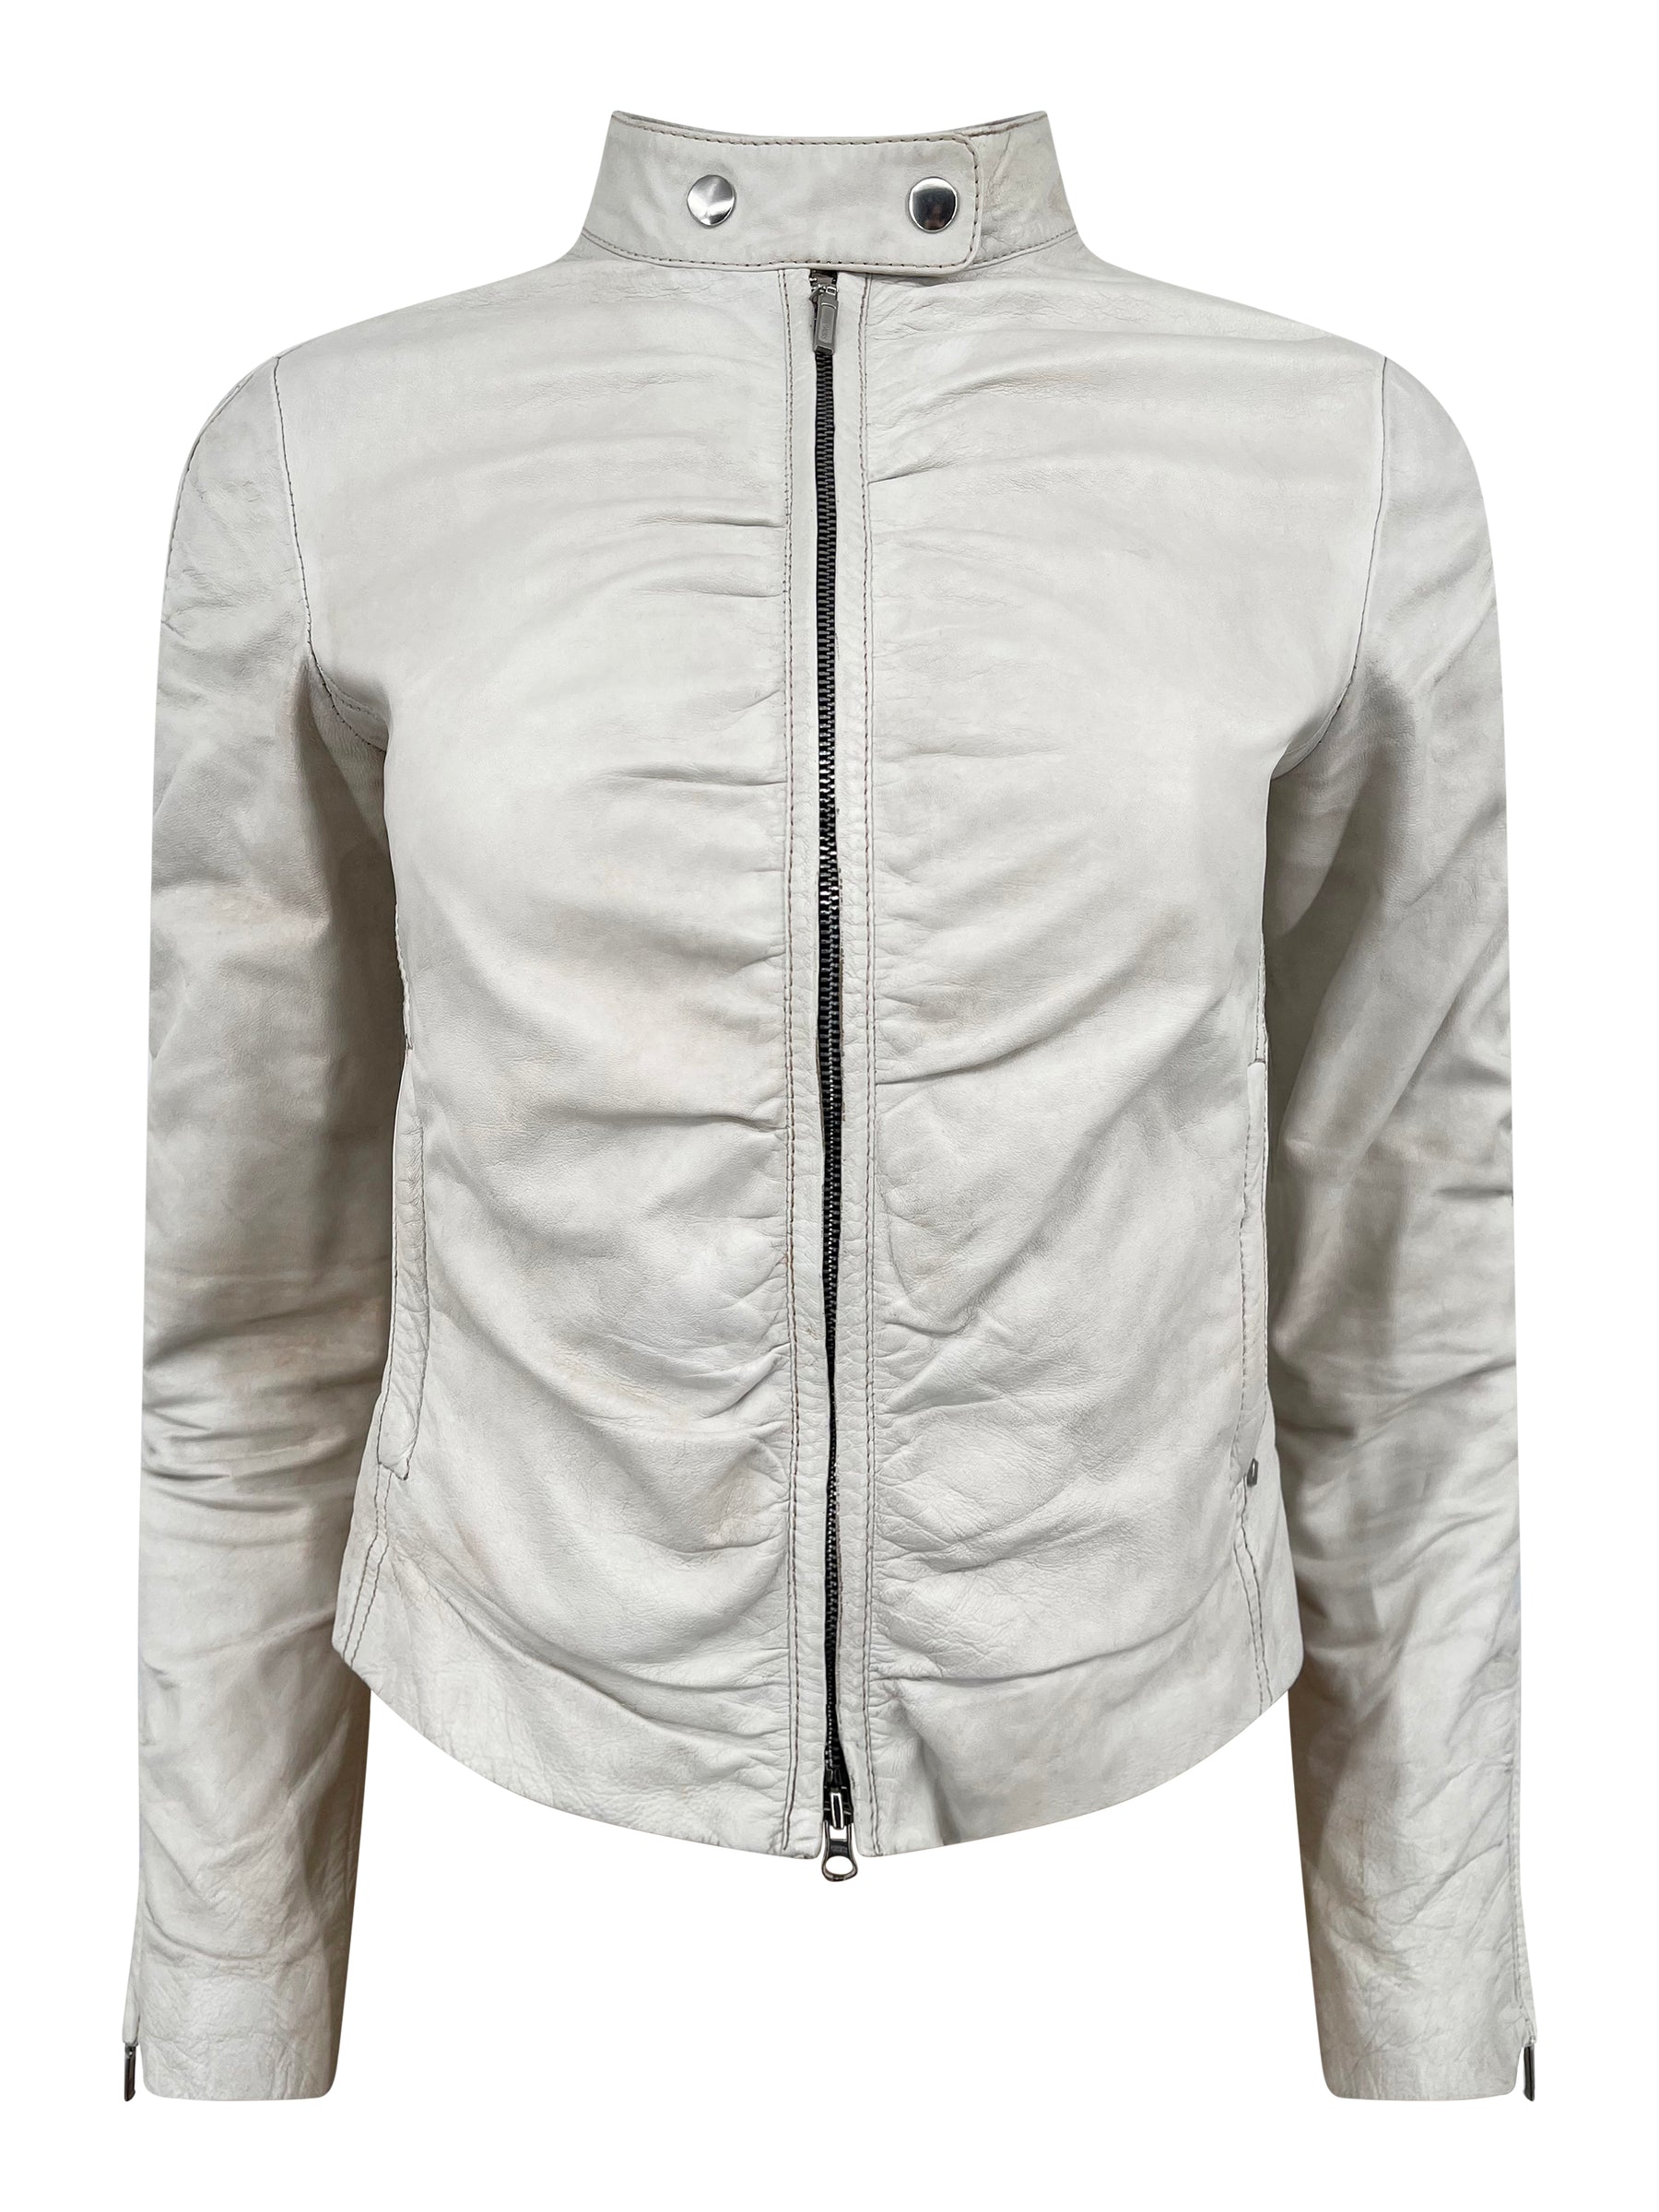 Vintage White Leather Jacket - ONFEMME By Lindsey's Kloset